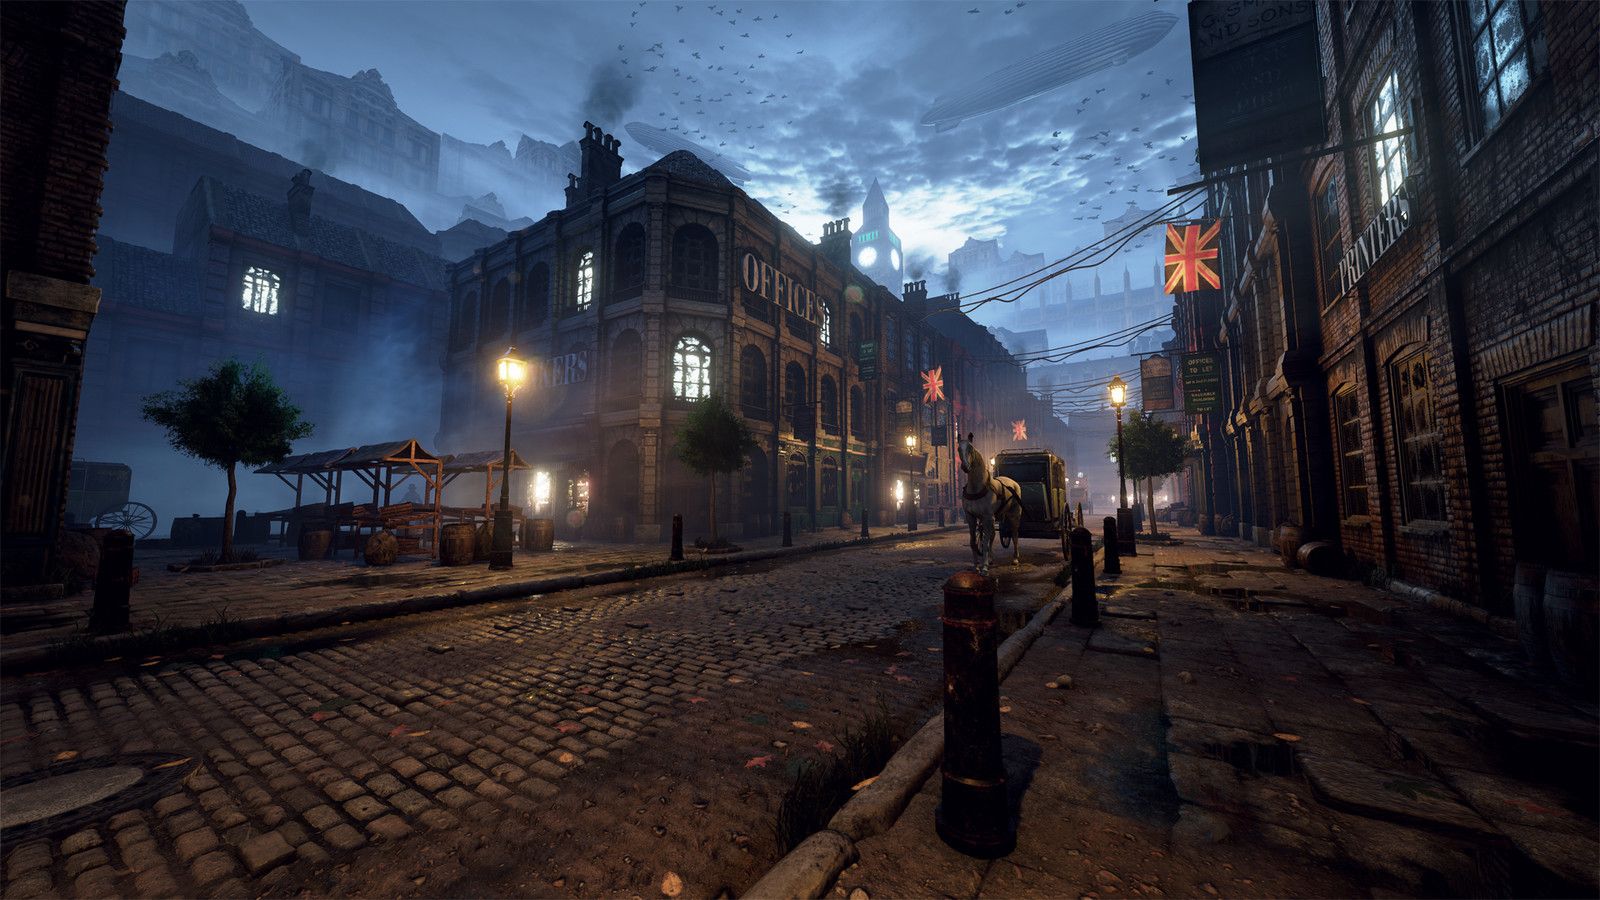 Unreal Engine Victorian London Environment Michal Baca On